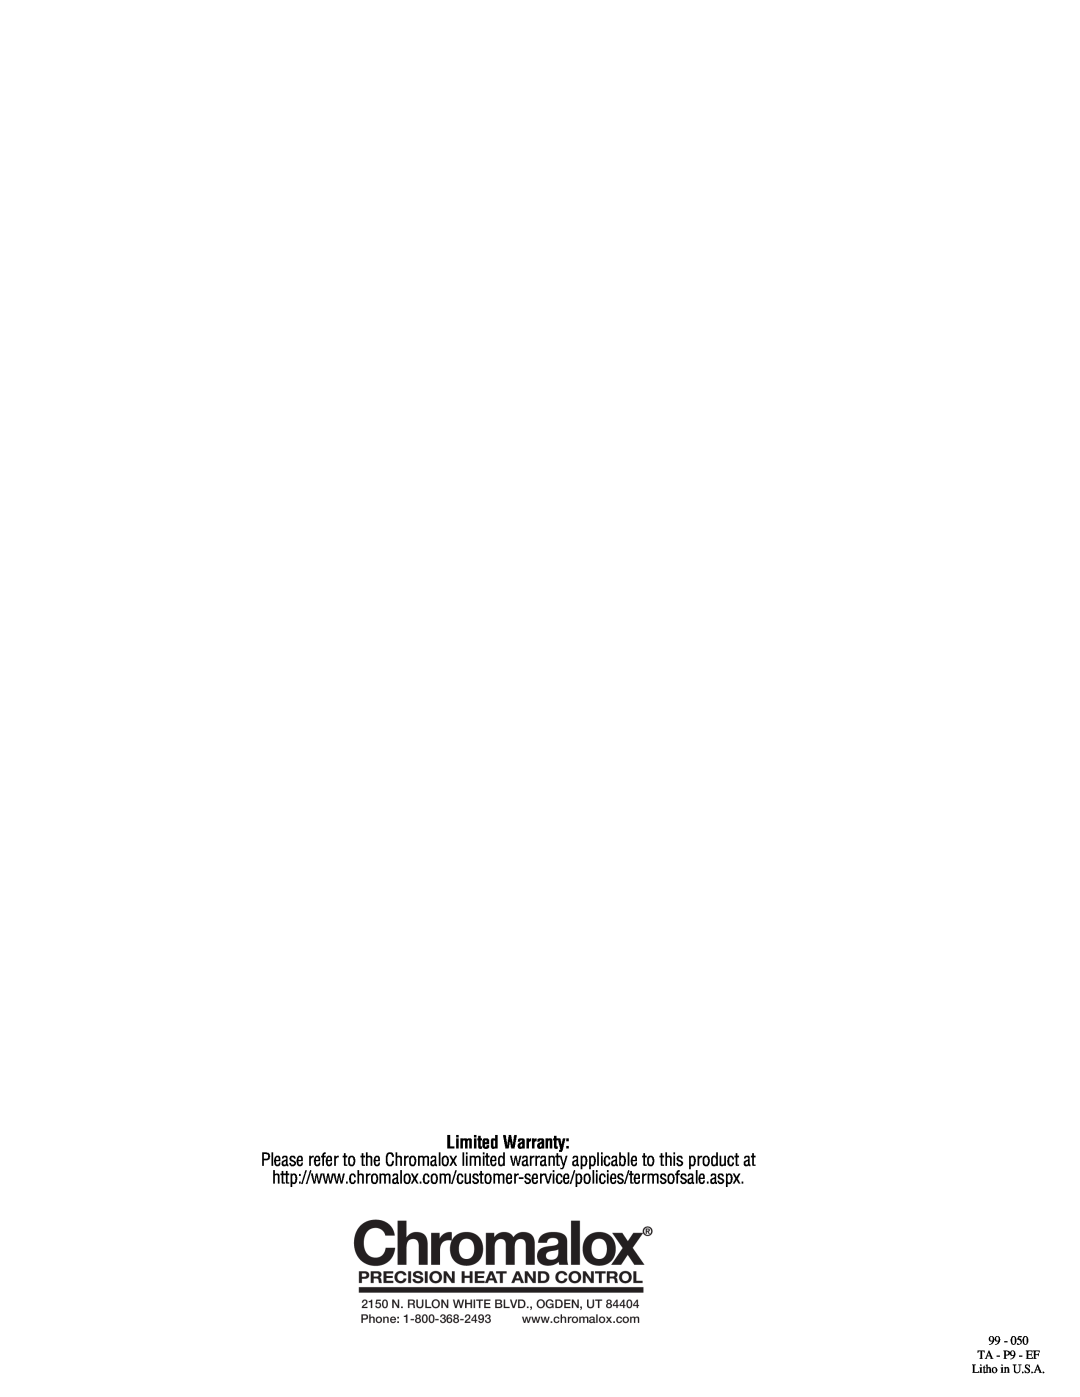 Chromalox NWHO-33015 specifications Limited Warranty, 2150 N. RULON WHITE BLVD., OGDEN, UT, Phone 